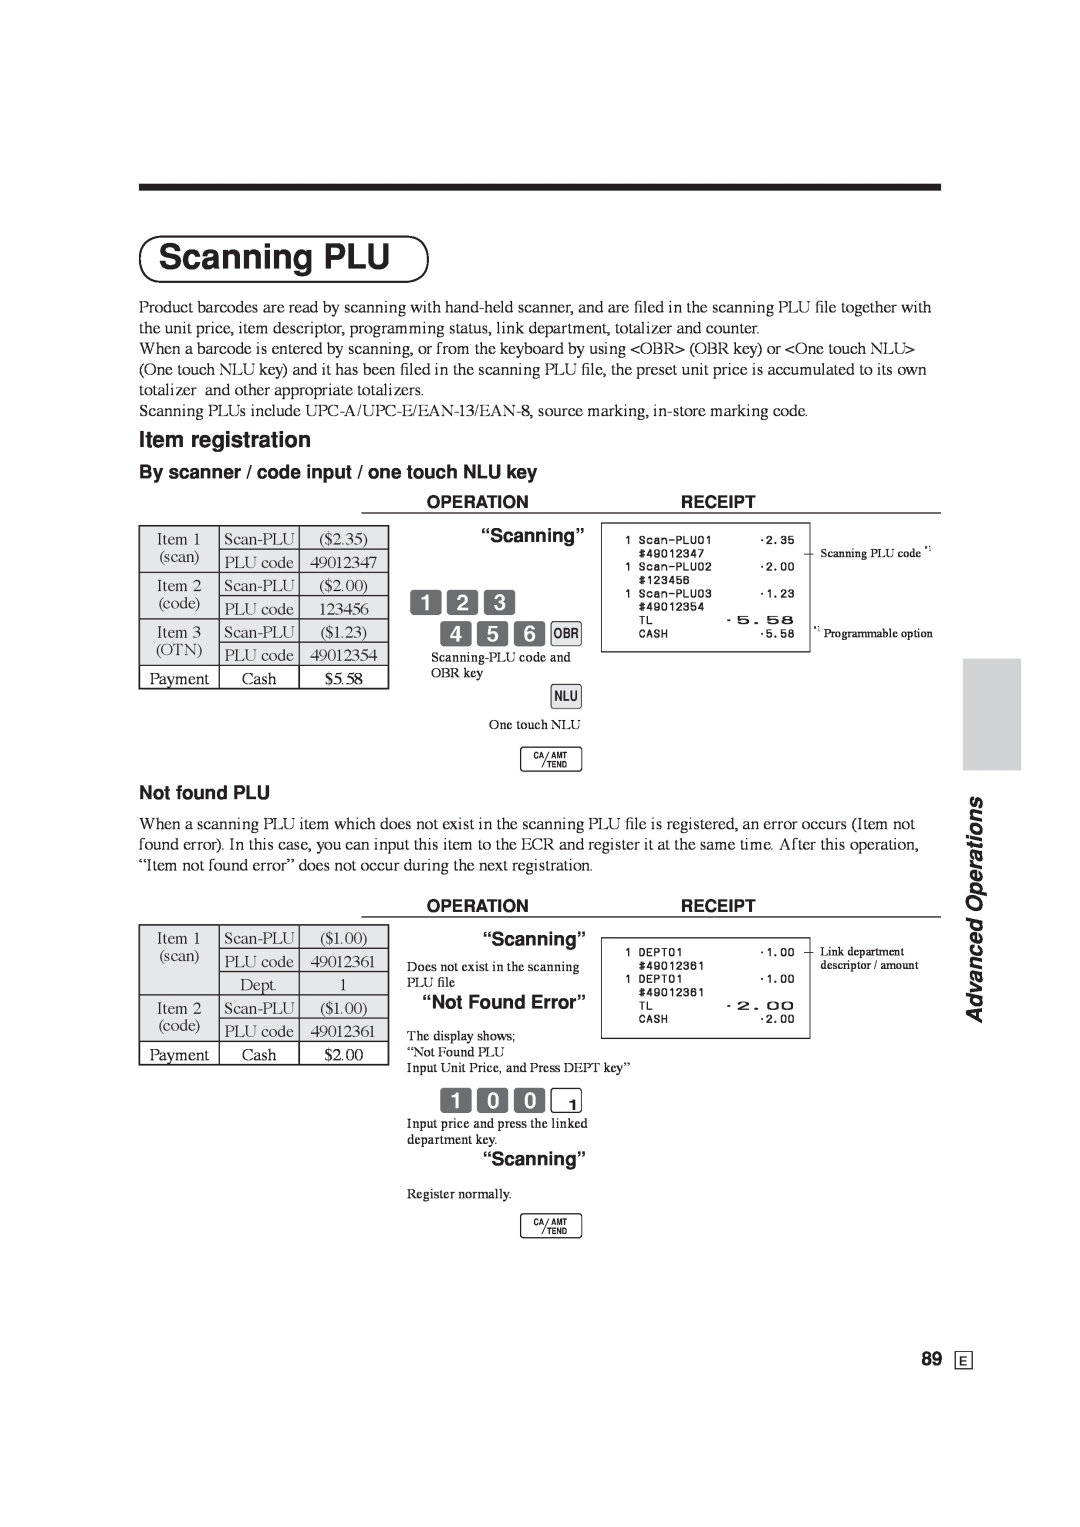 Casio SE-C6000 Scanning PLU, Item registration, 123 456BO R, By scanner / code input / one touch NLU key, Not found PLU 